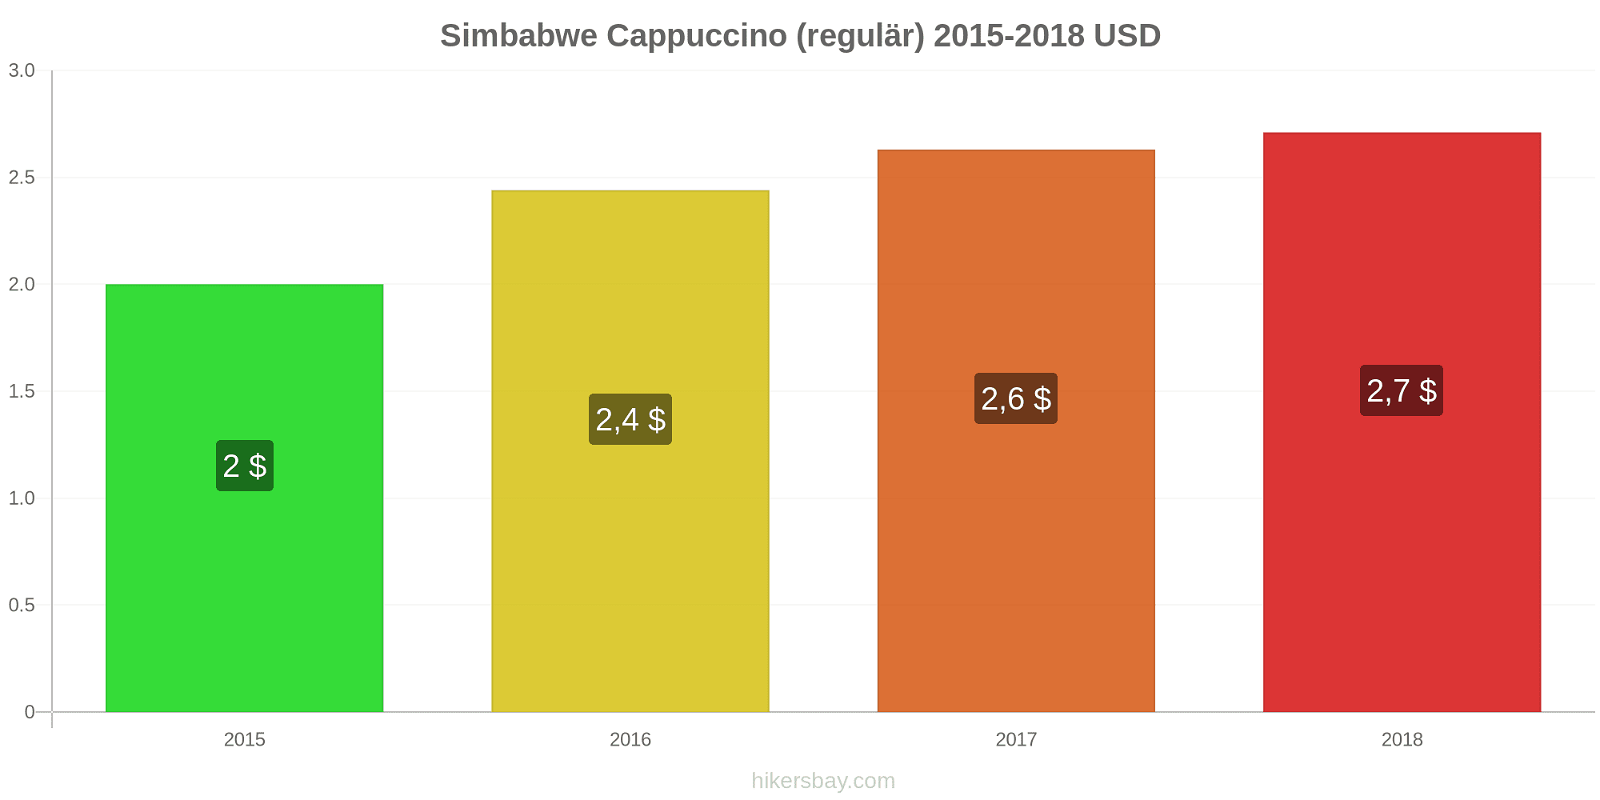 Simbabwe Preisänderungen Cappuccino (regulär) hikersbay.com